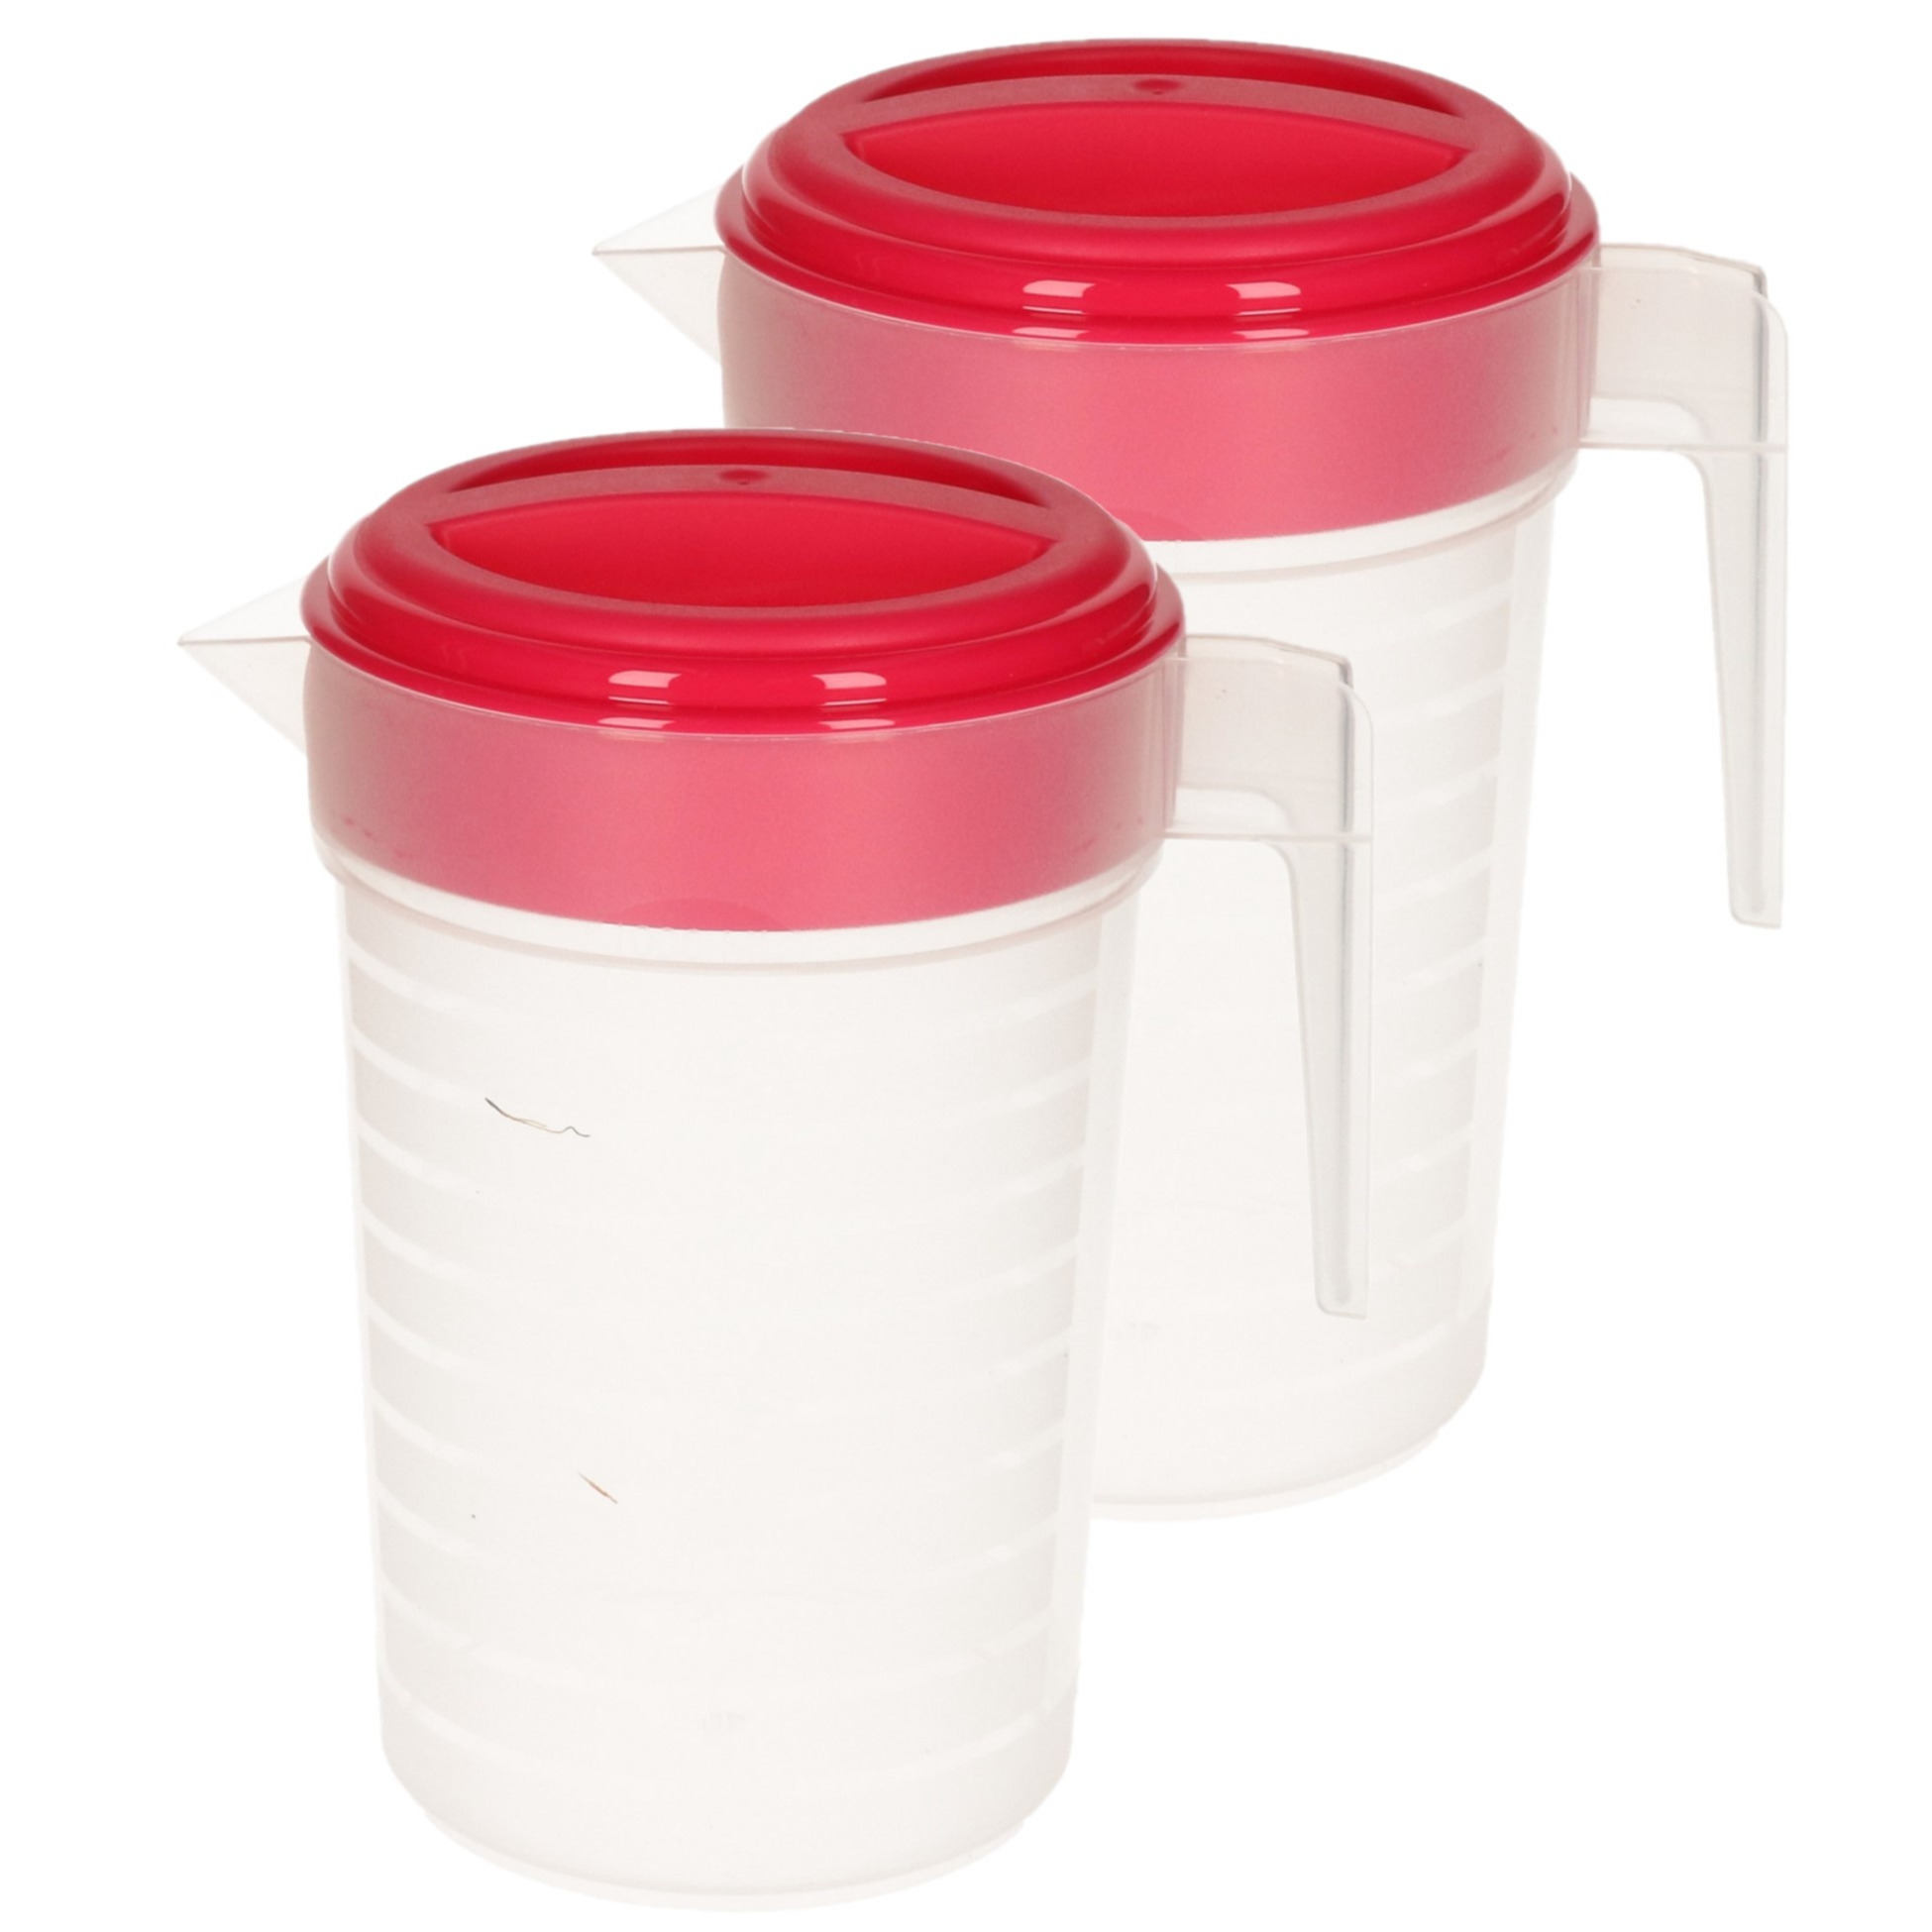 PlasticForte 2x stuks waterkan/sapkan transparant/fuchsia roze met deksel 1 liter kunststof -